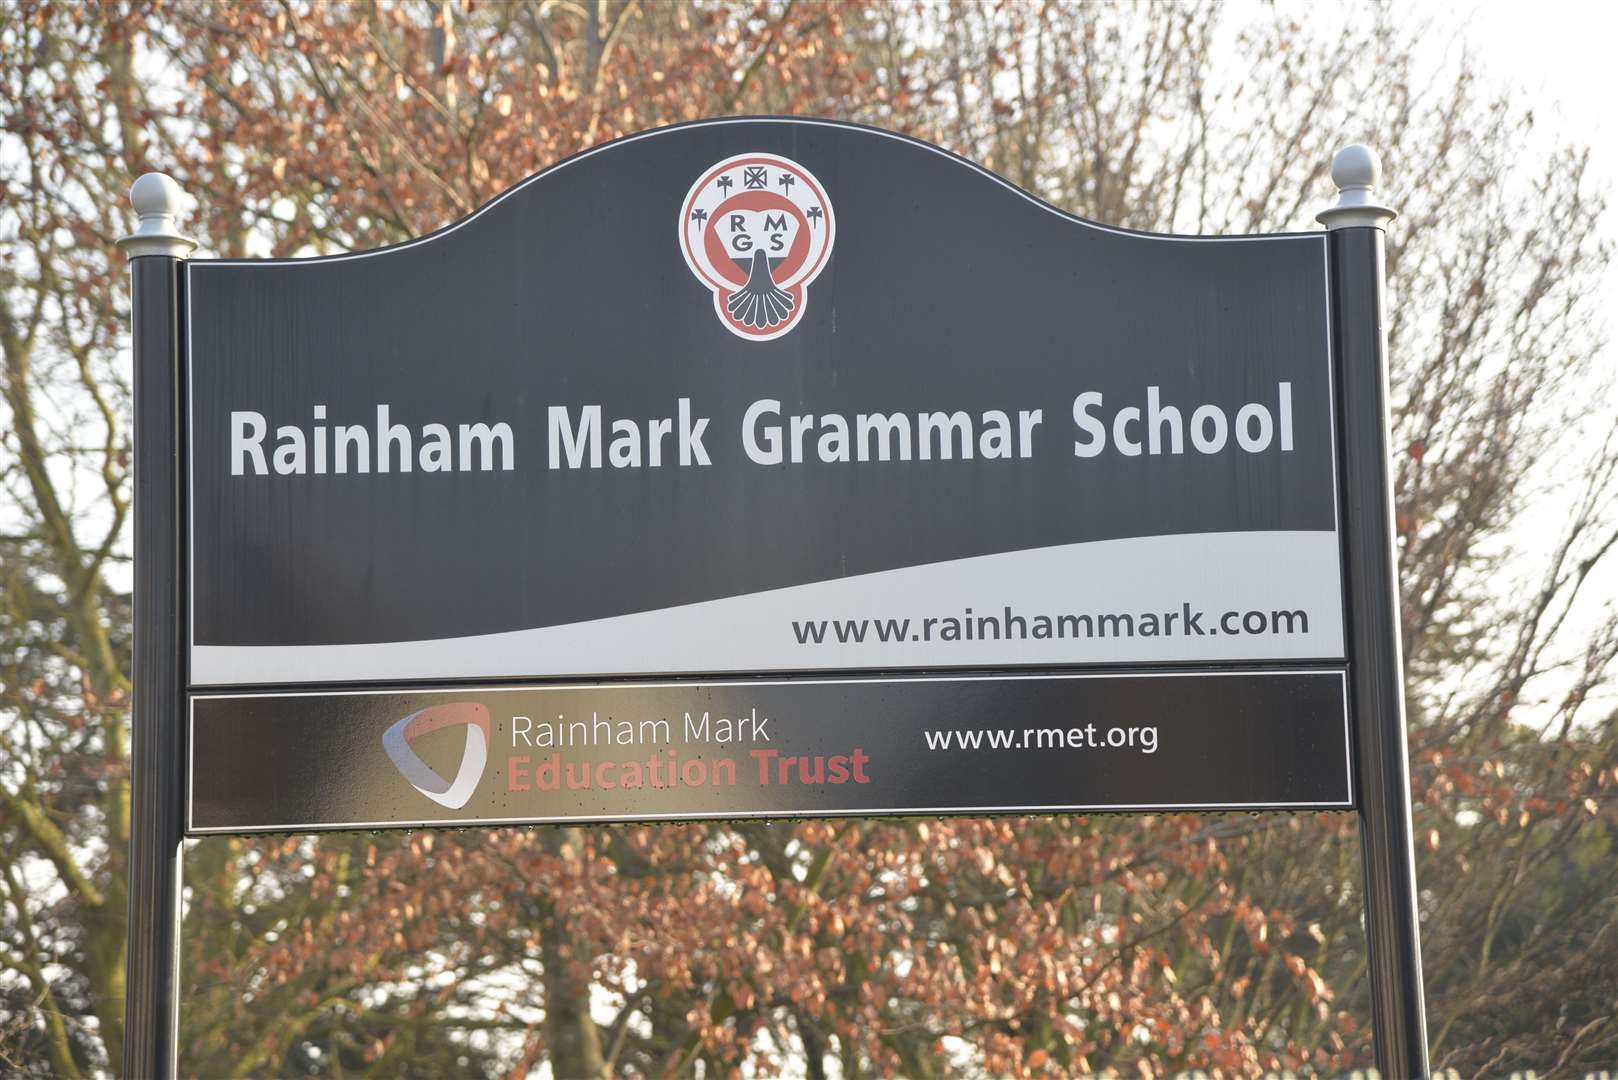 Rainham Mark Grammar School has issued a stranger danger warning